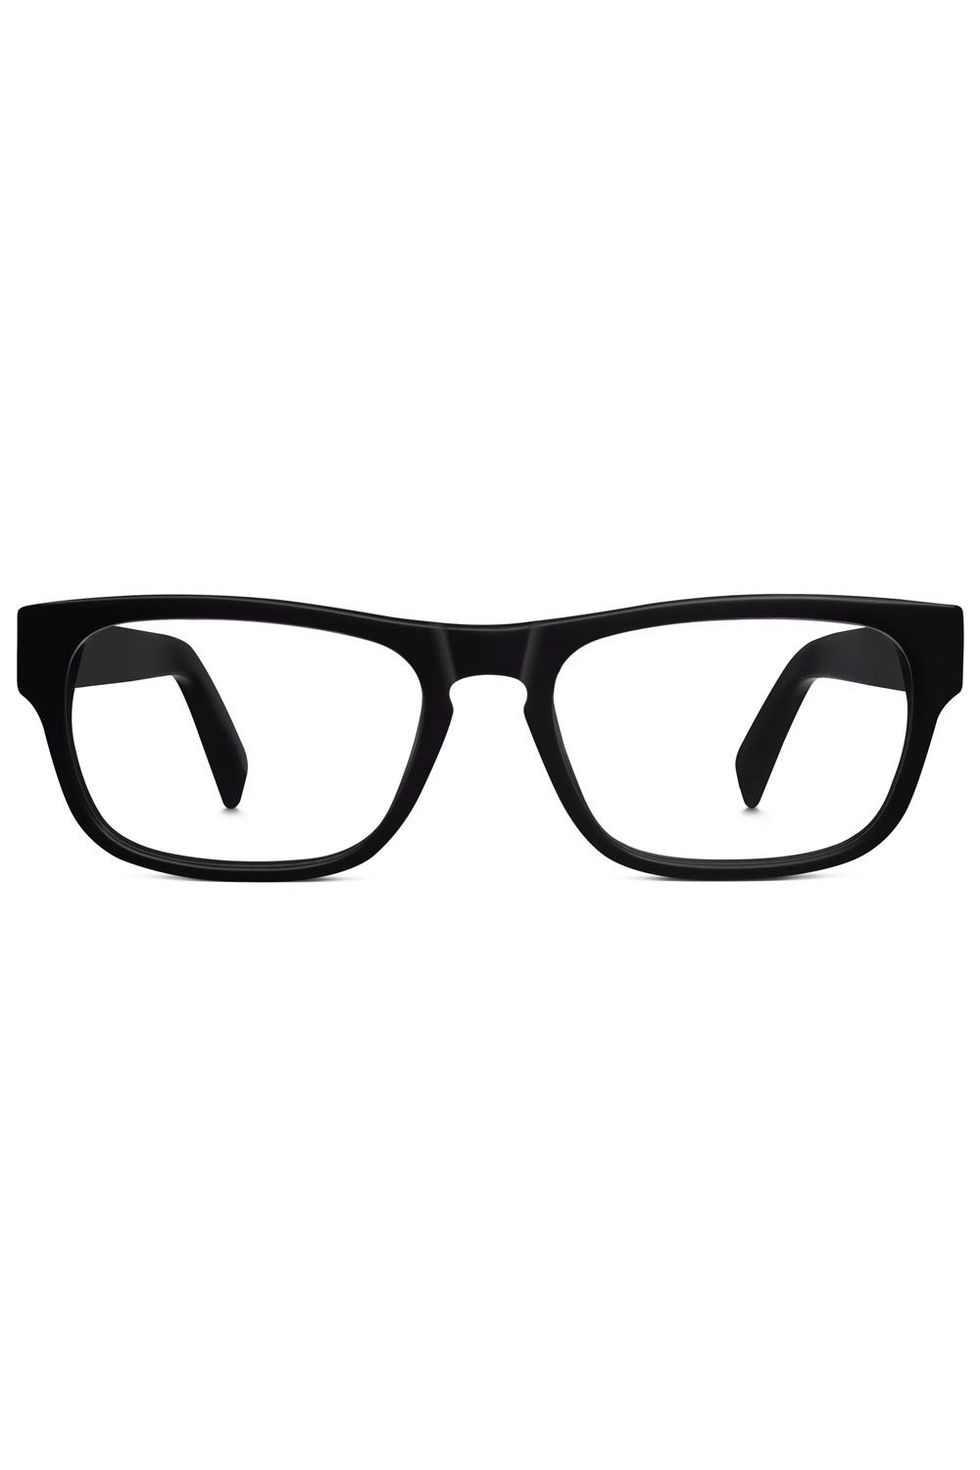 Roosevelt Glasses